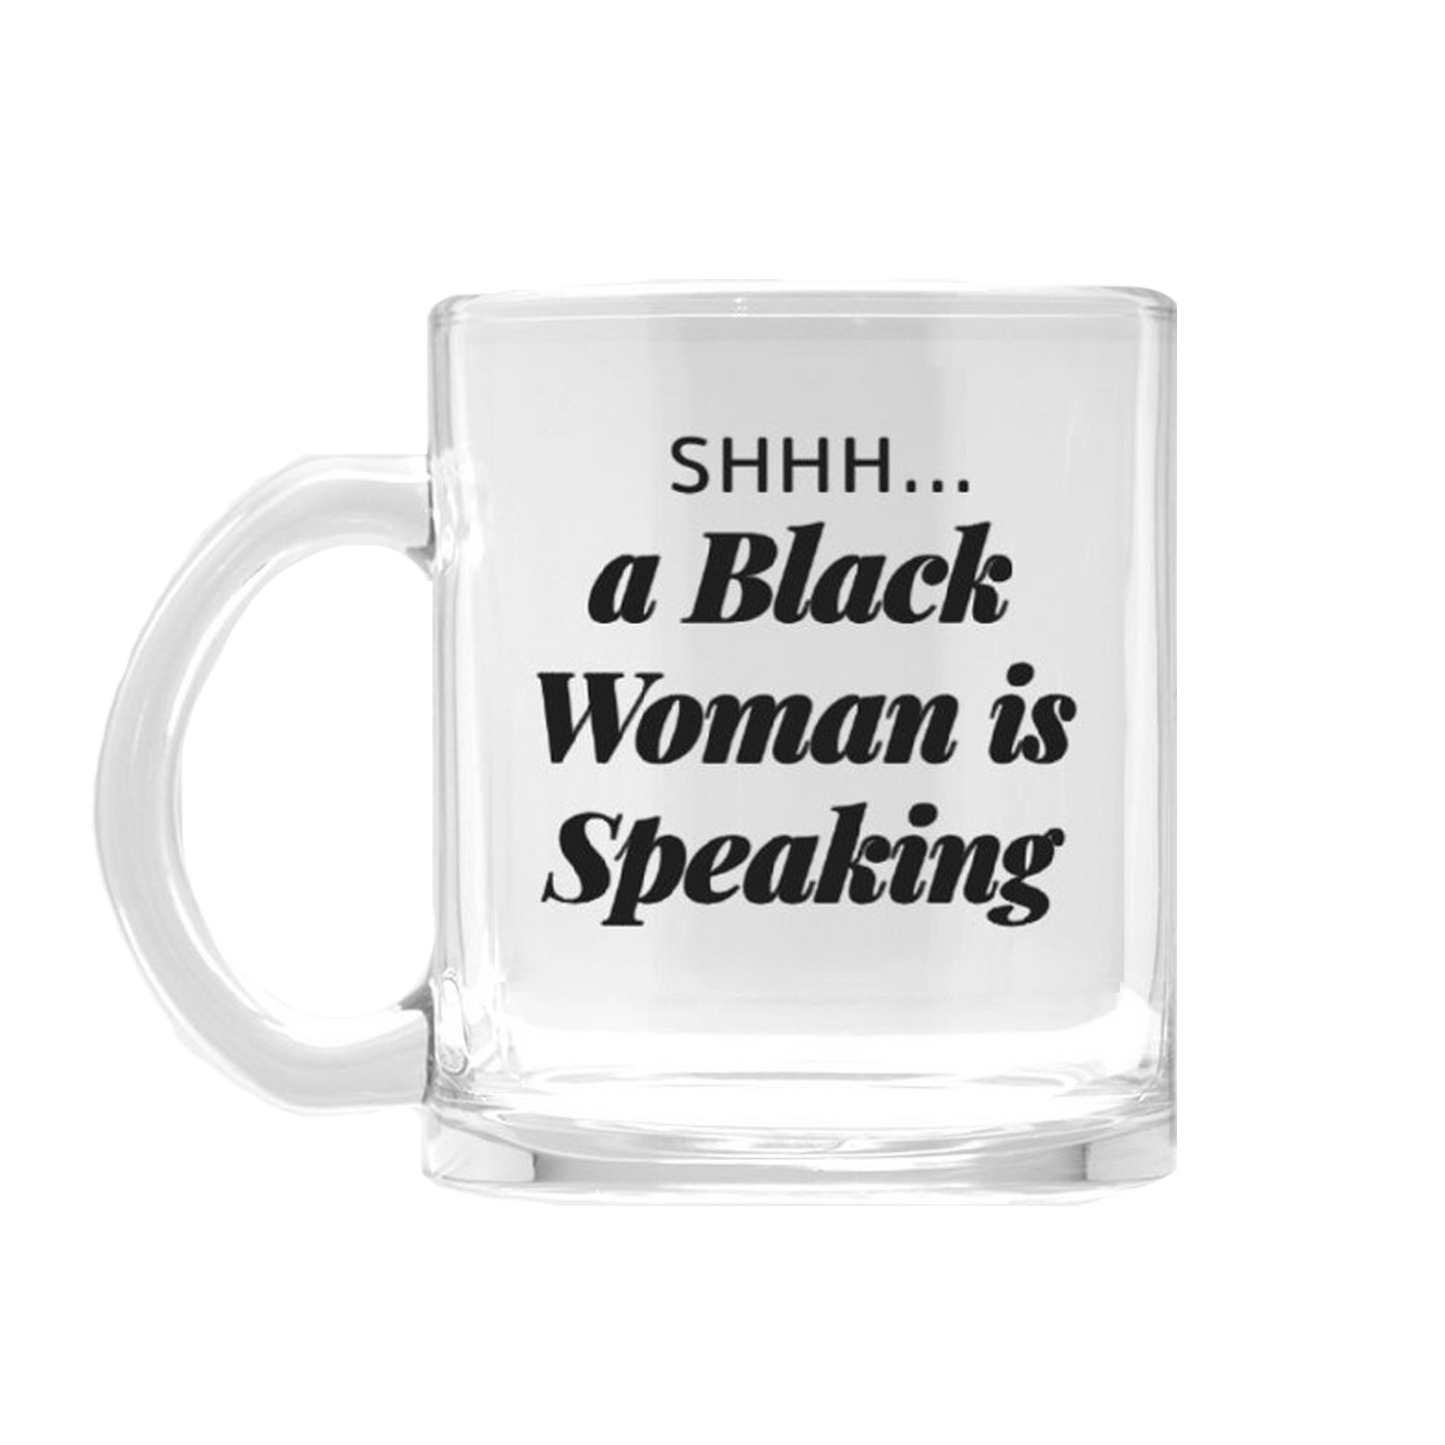 Shhh... A Black Woman is Speaking Glass Mug